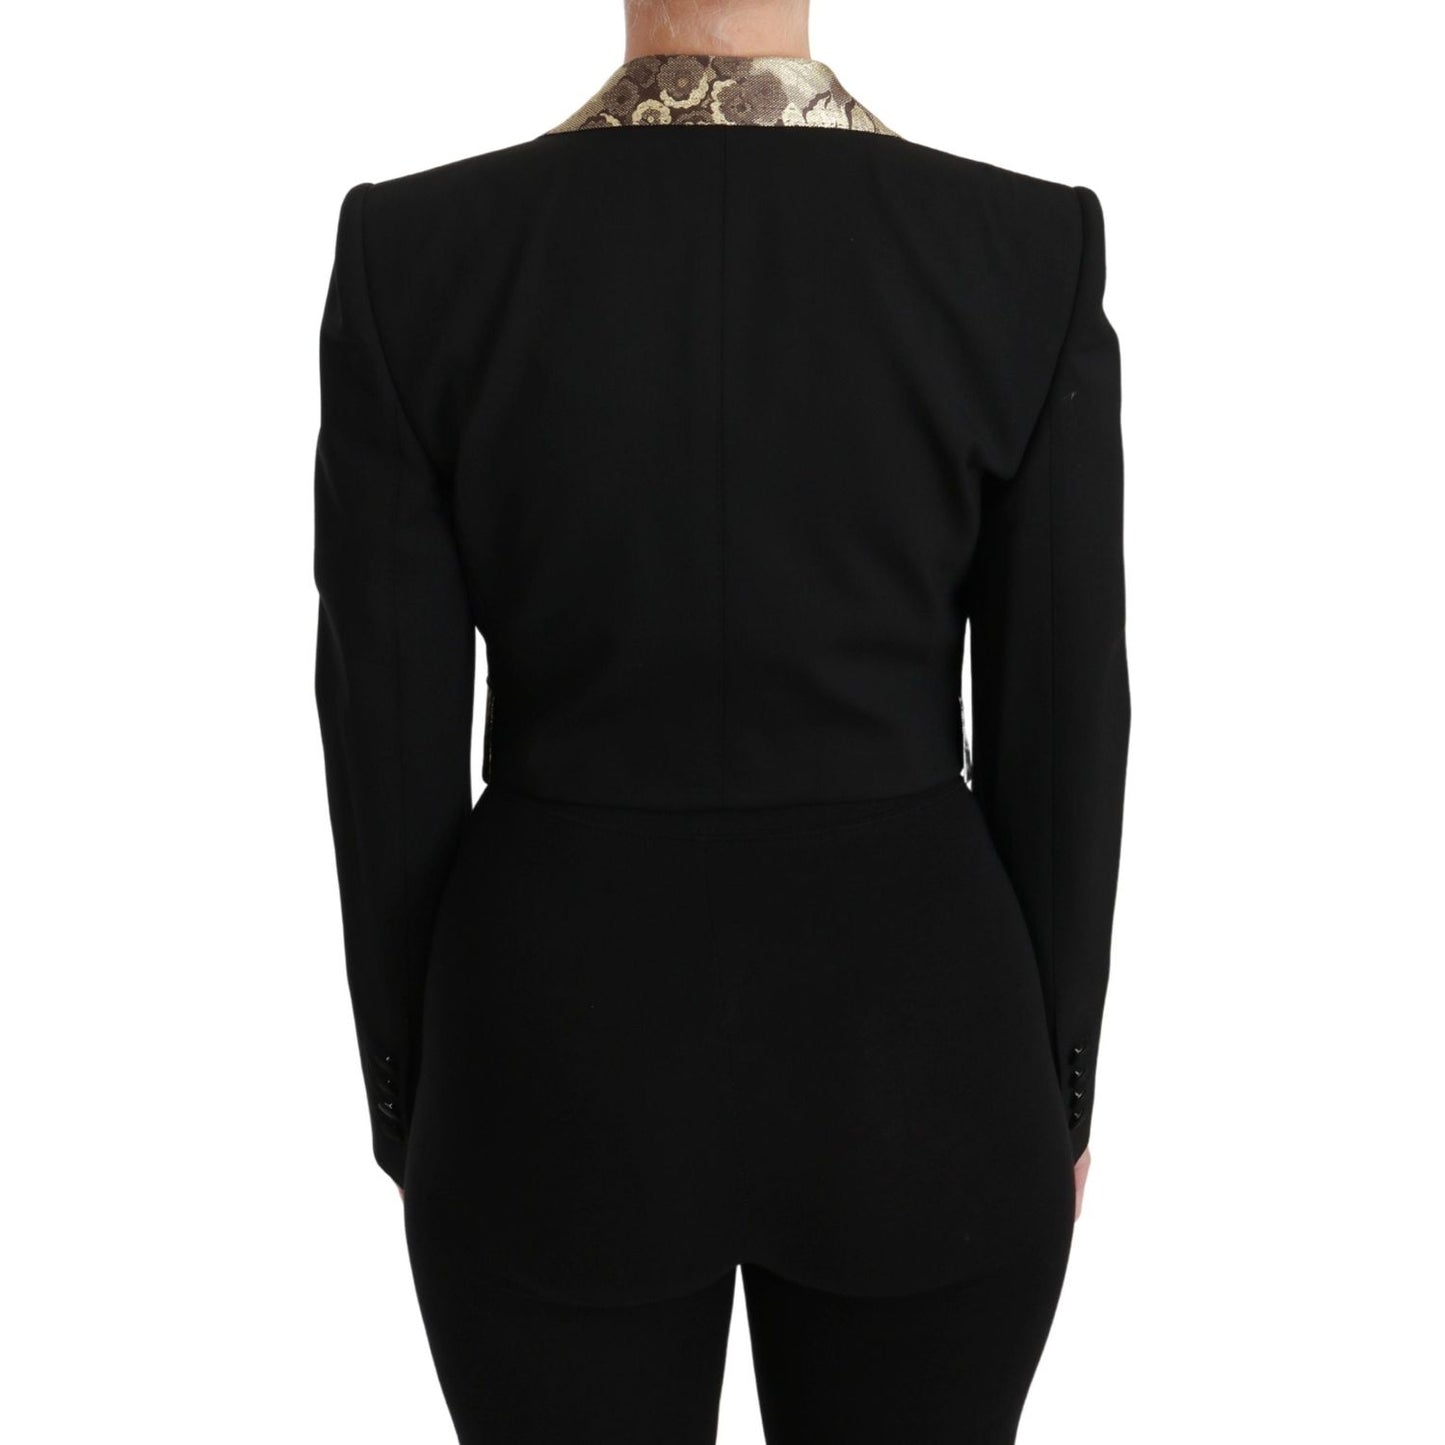 Dolce & Gabbana Opulent Black Gold Floral Jacket and Vest Ensemble Coats & Jackets black-jacquard-vest-blazer-coat-wool-jacket